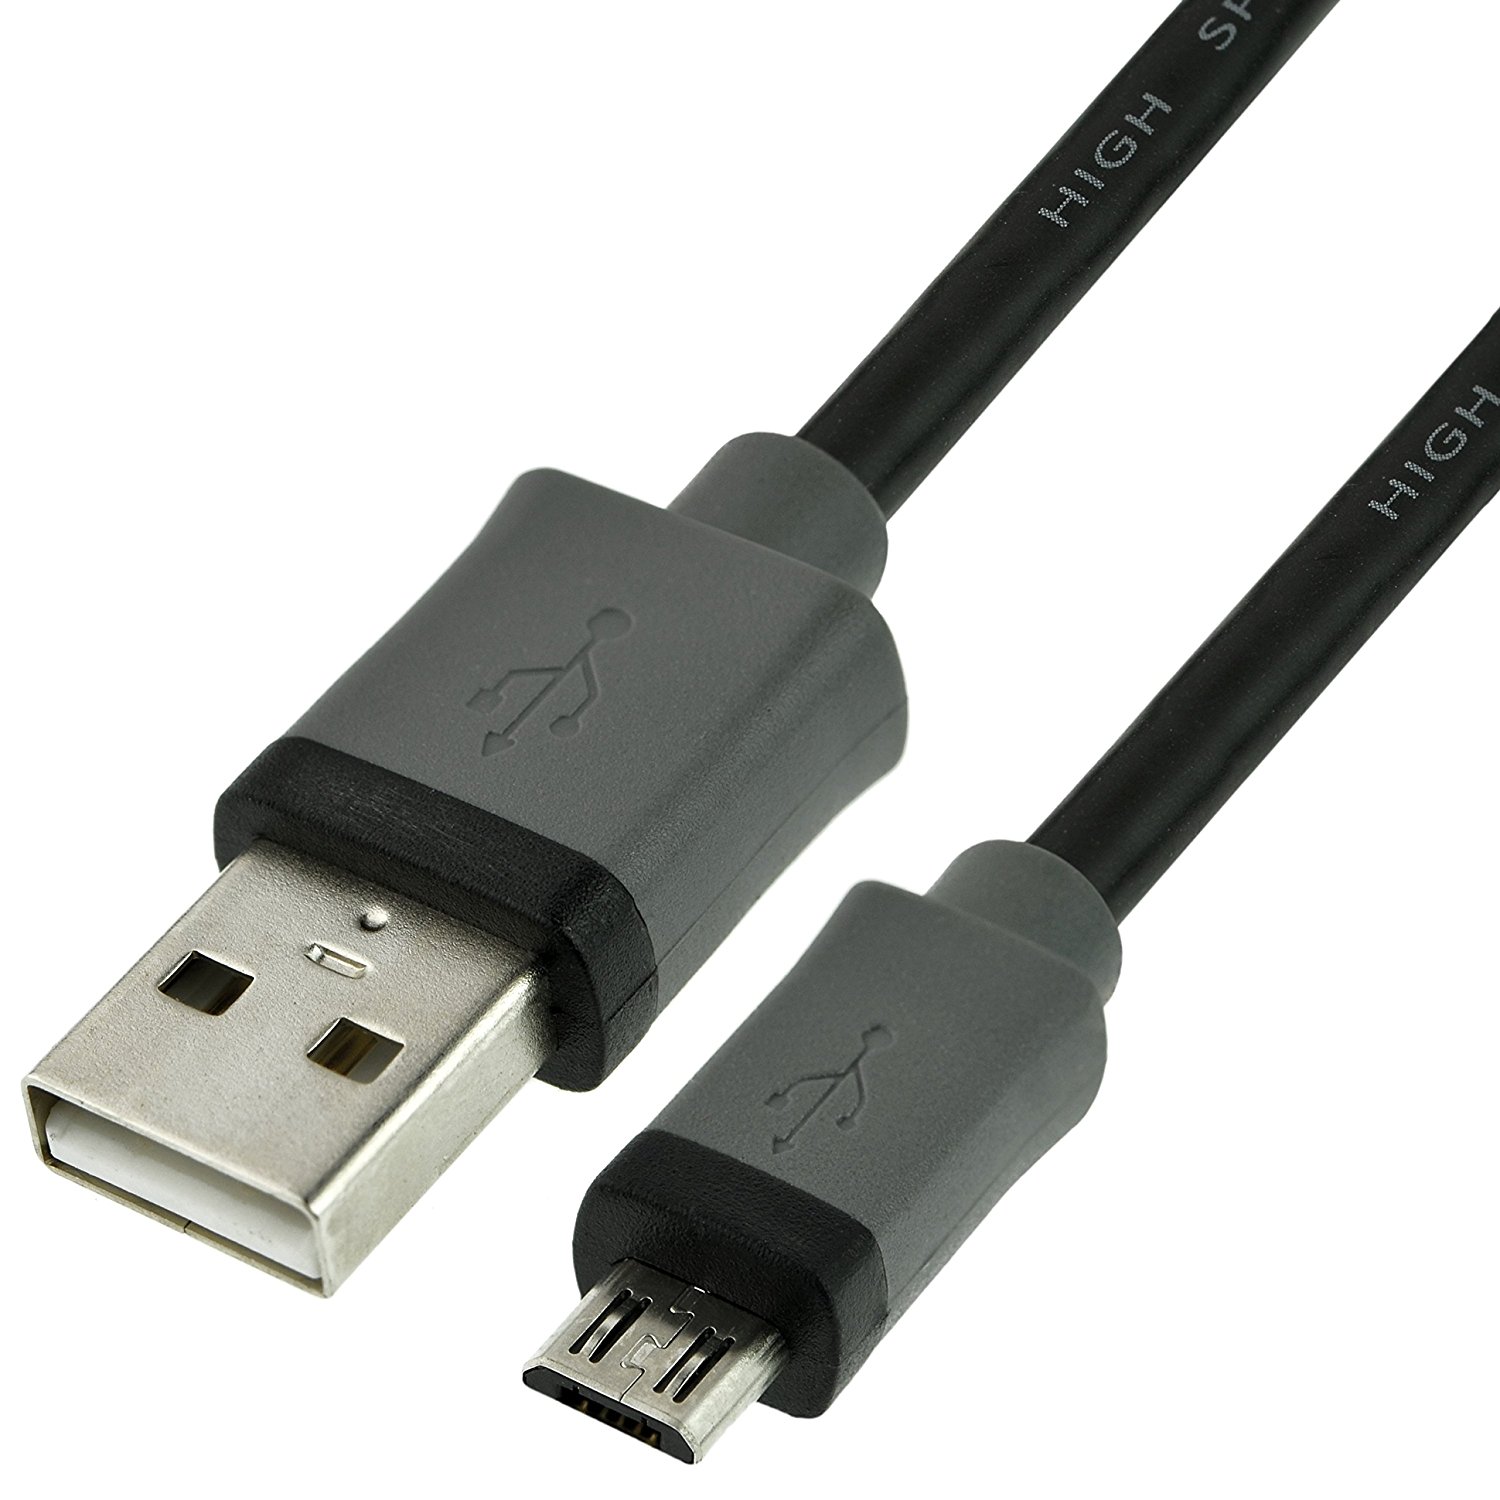 Amazon.com: Mediabridge USB 2.0 - Micro-USB to USB Cable (6 Feet ...